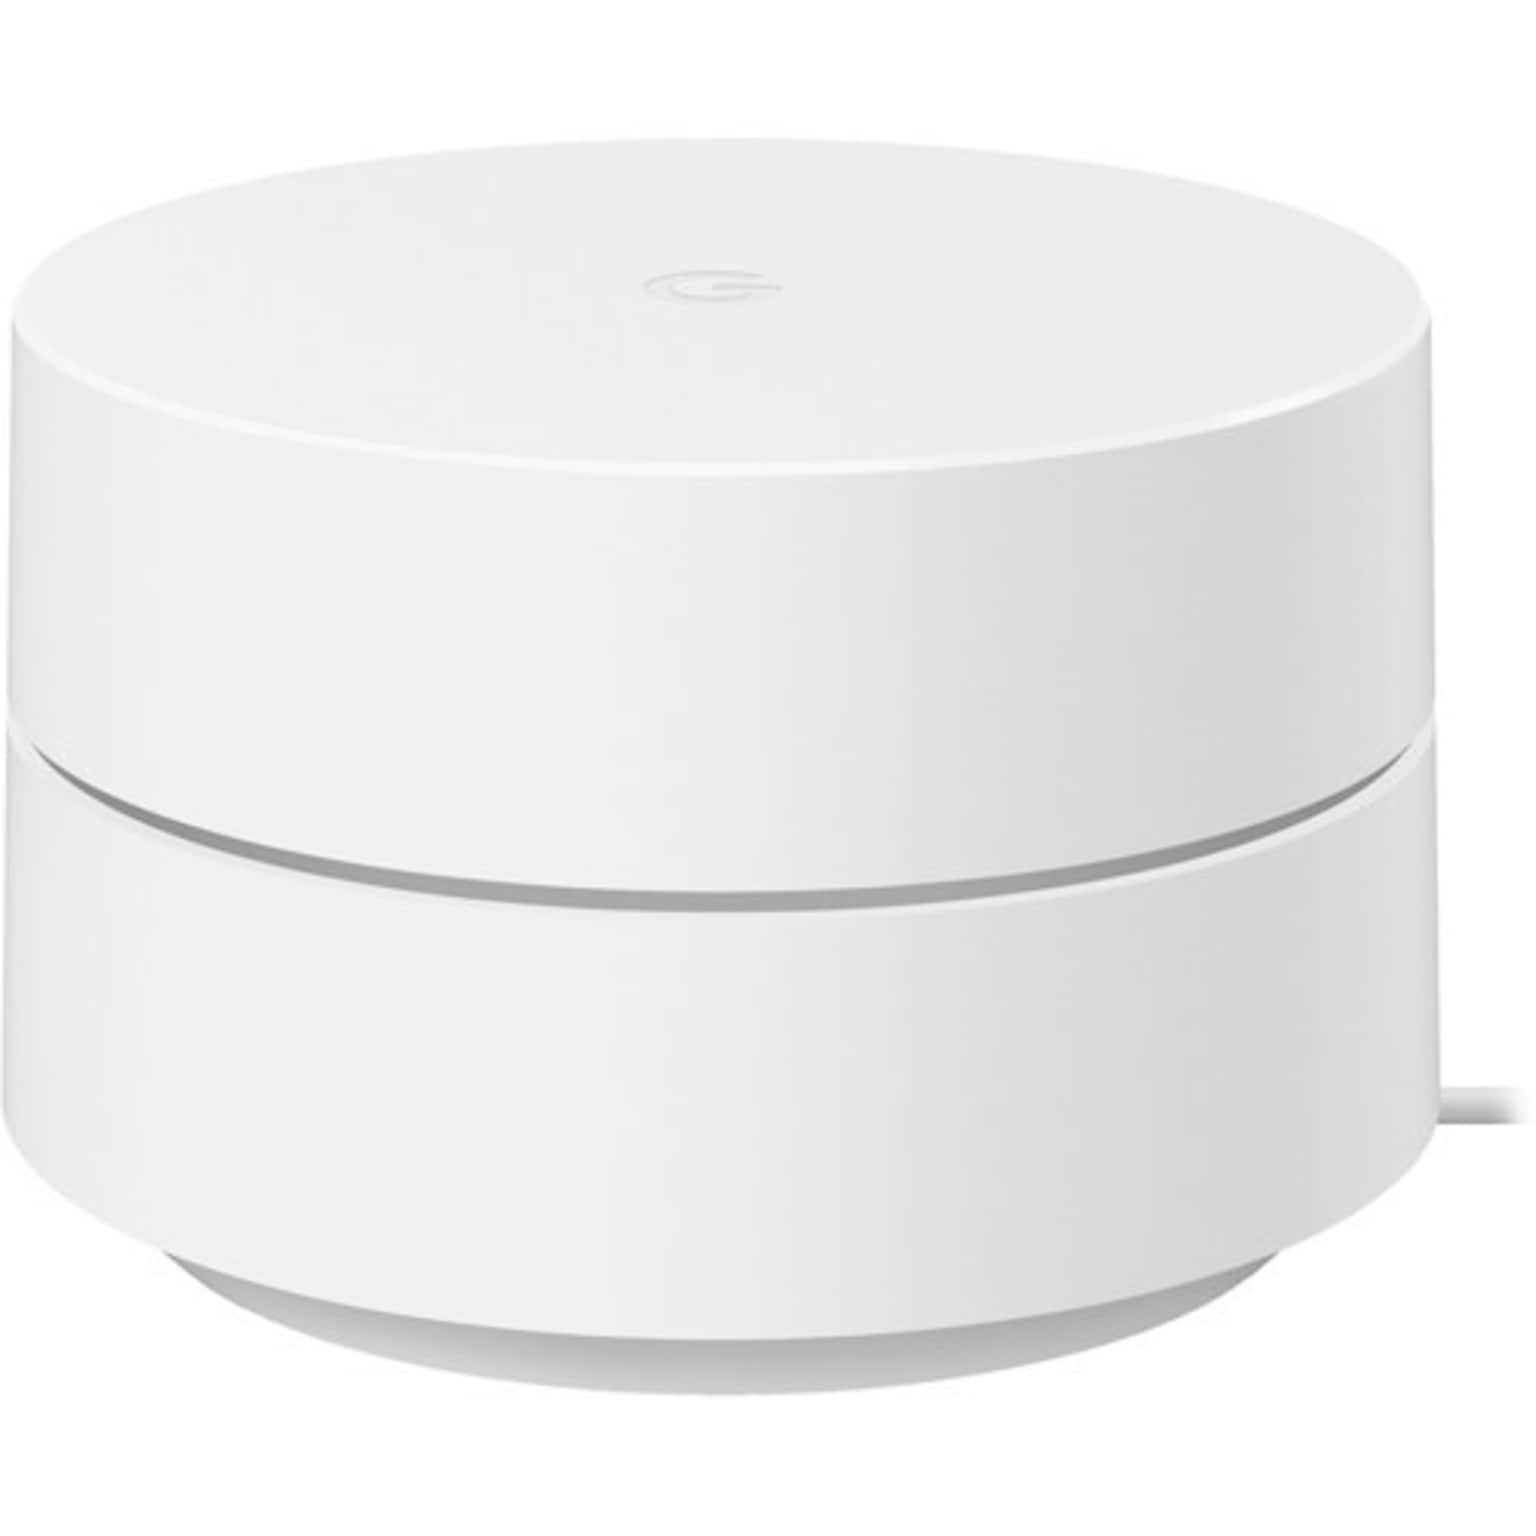 Google WiFi AC1200 Dual-Band Wireless Mesh Router, White (GA02430-US)